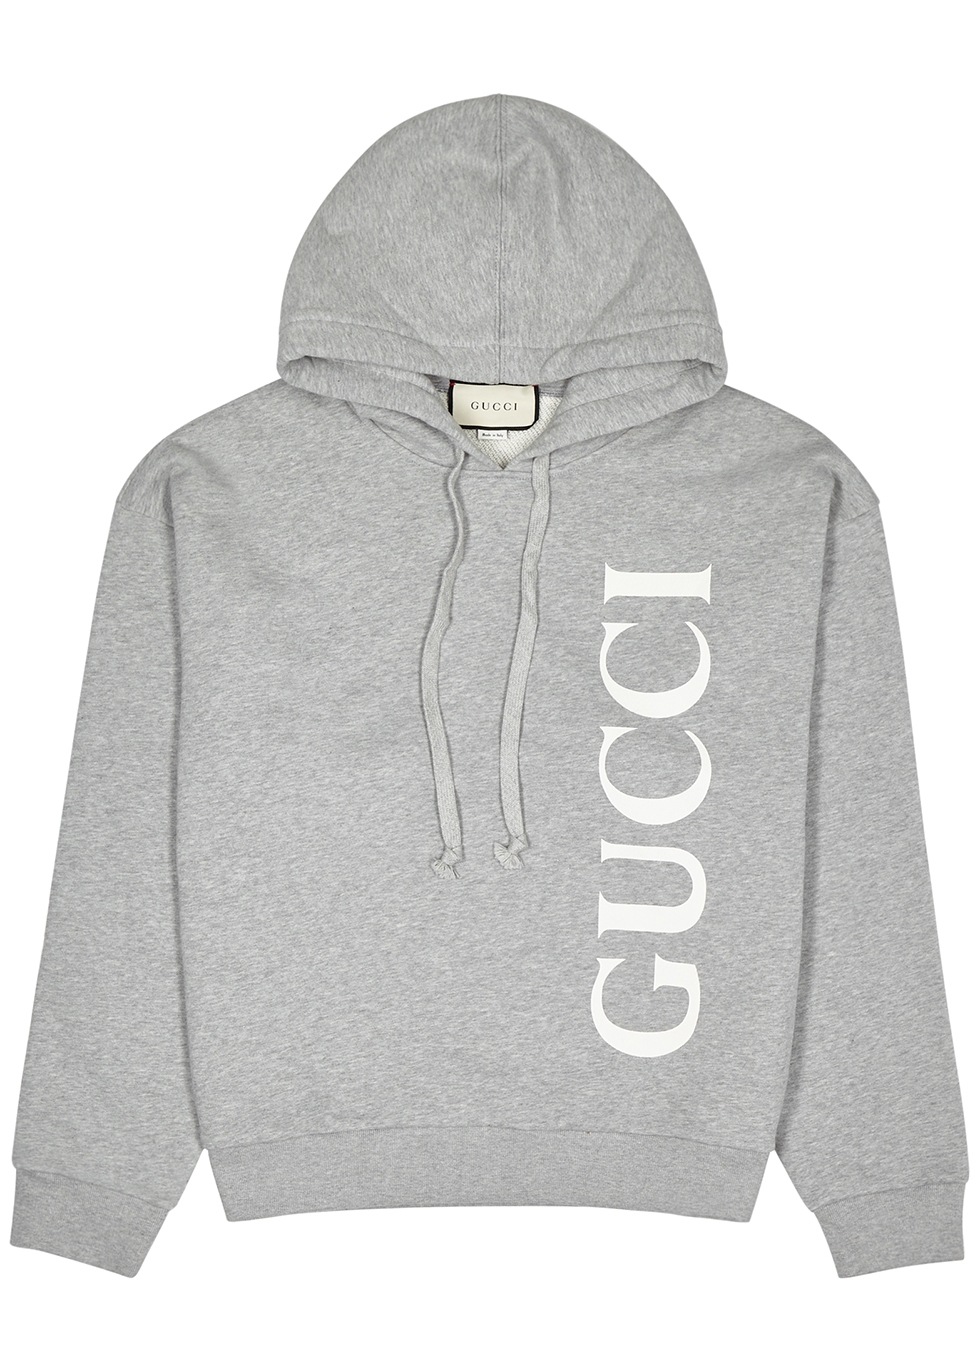 Gucci Grey logo hooded cotton 